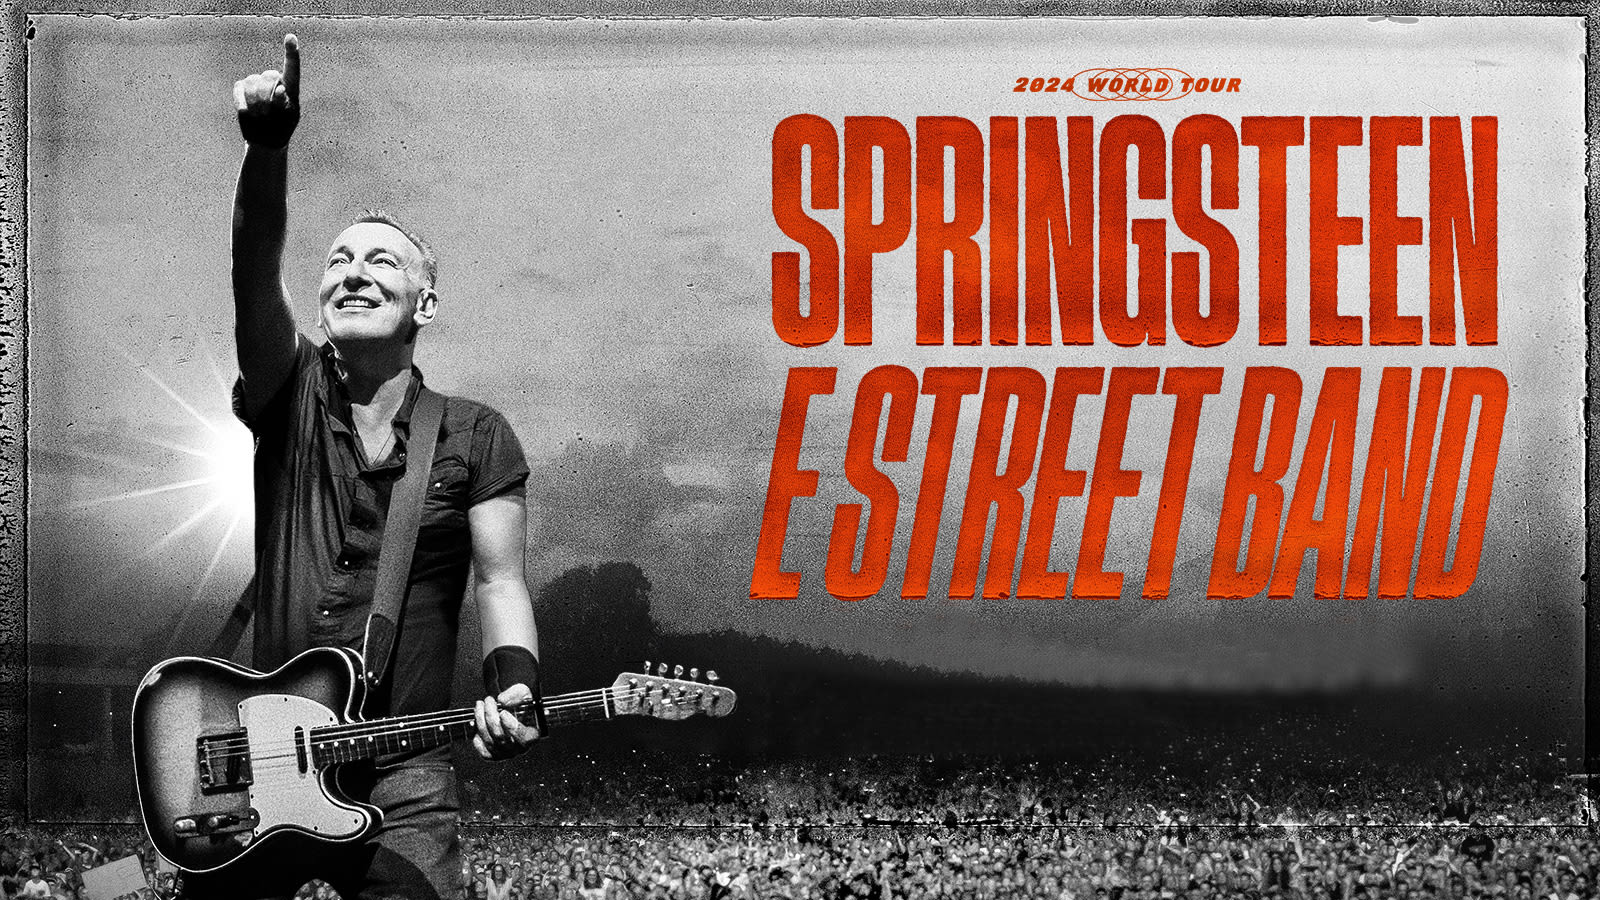 Bruce Springsteen 2024 UK Tour Dates, Concert Venues & More